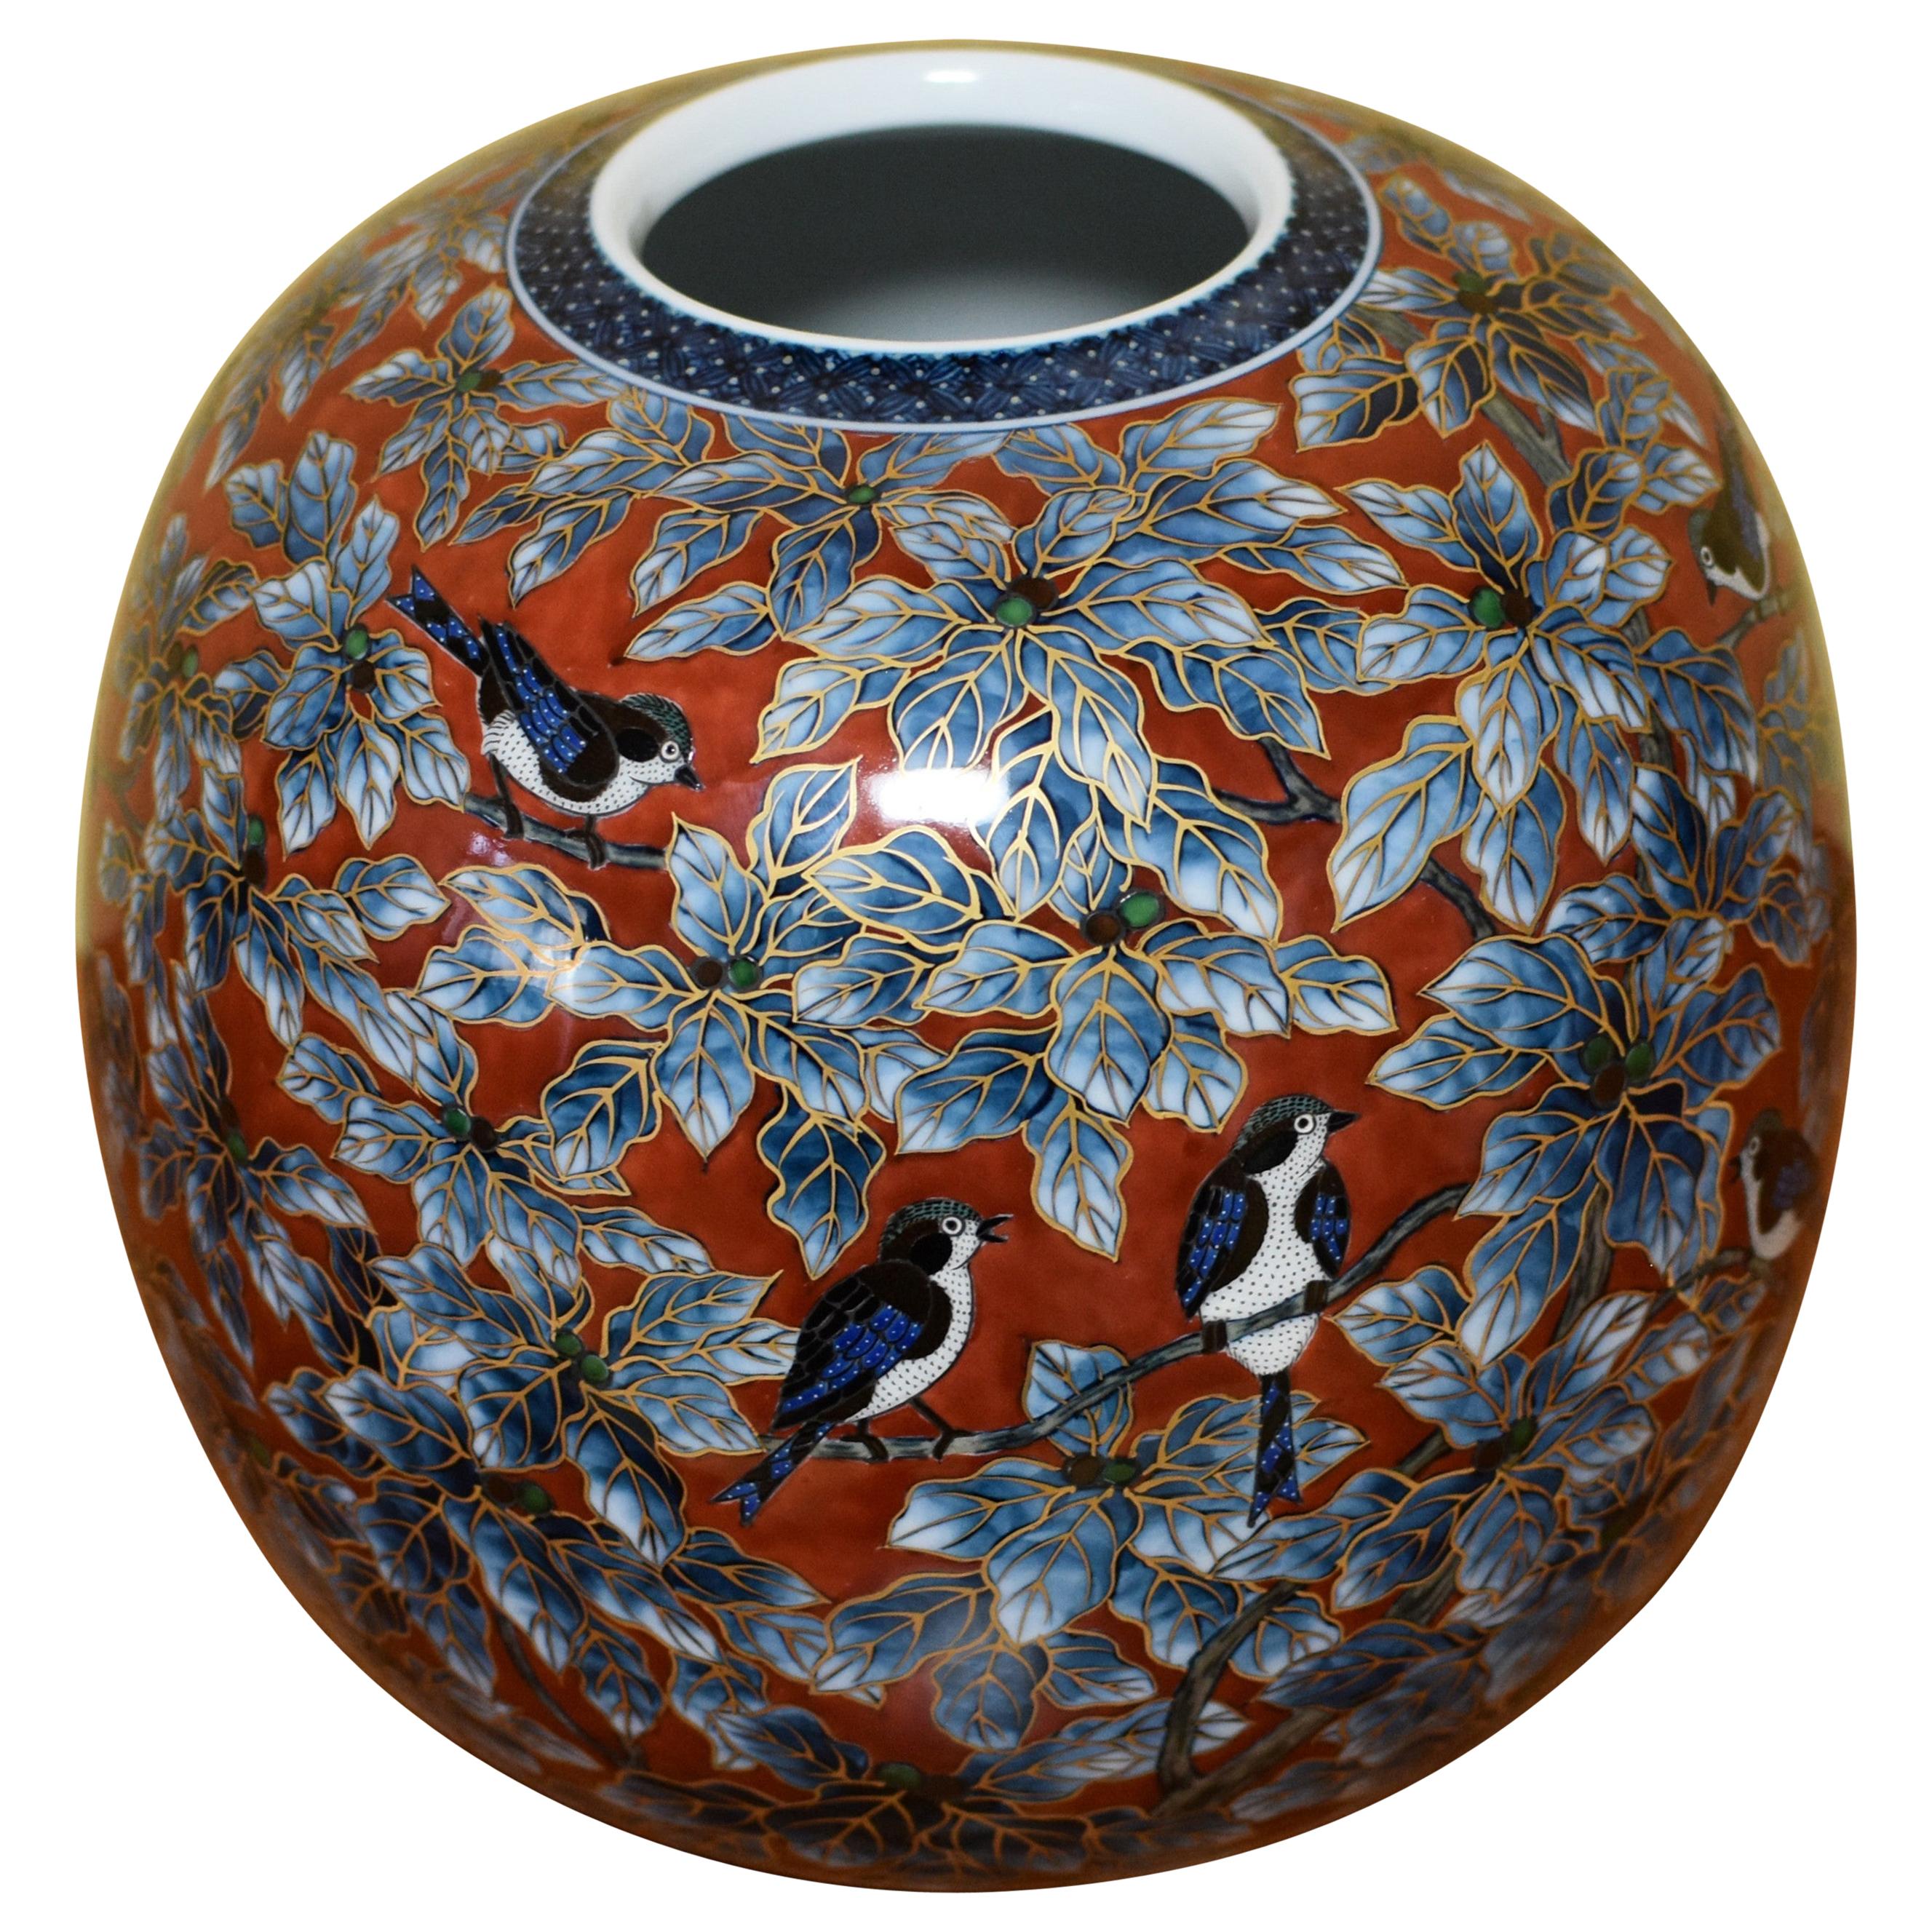 Japanese Contemporary Blue White Gold Red Porcelain Vase by Master Artist